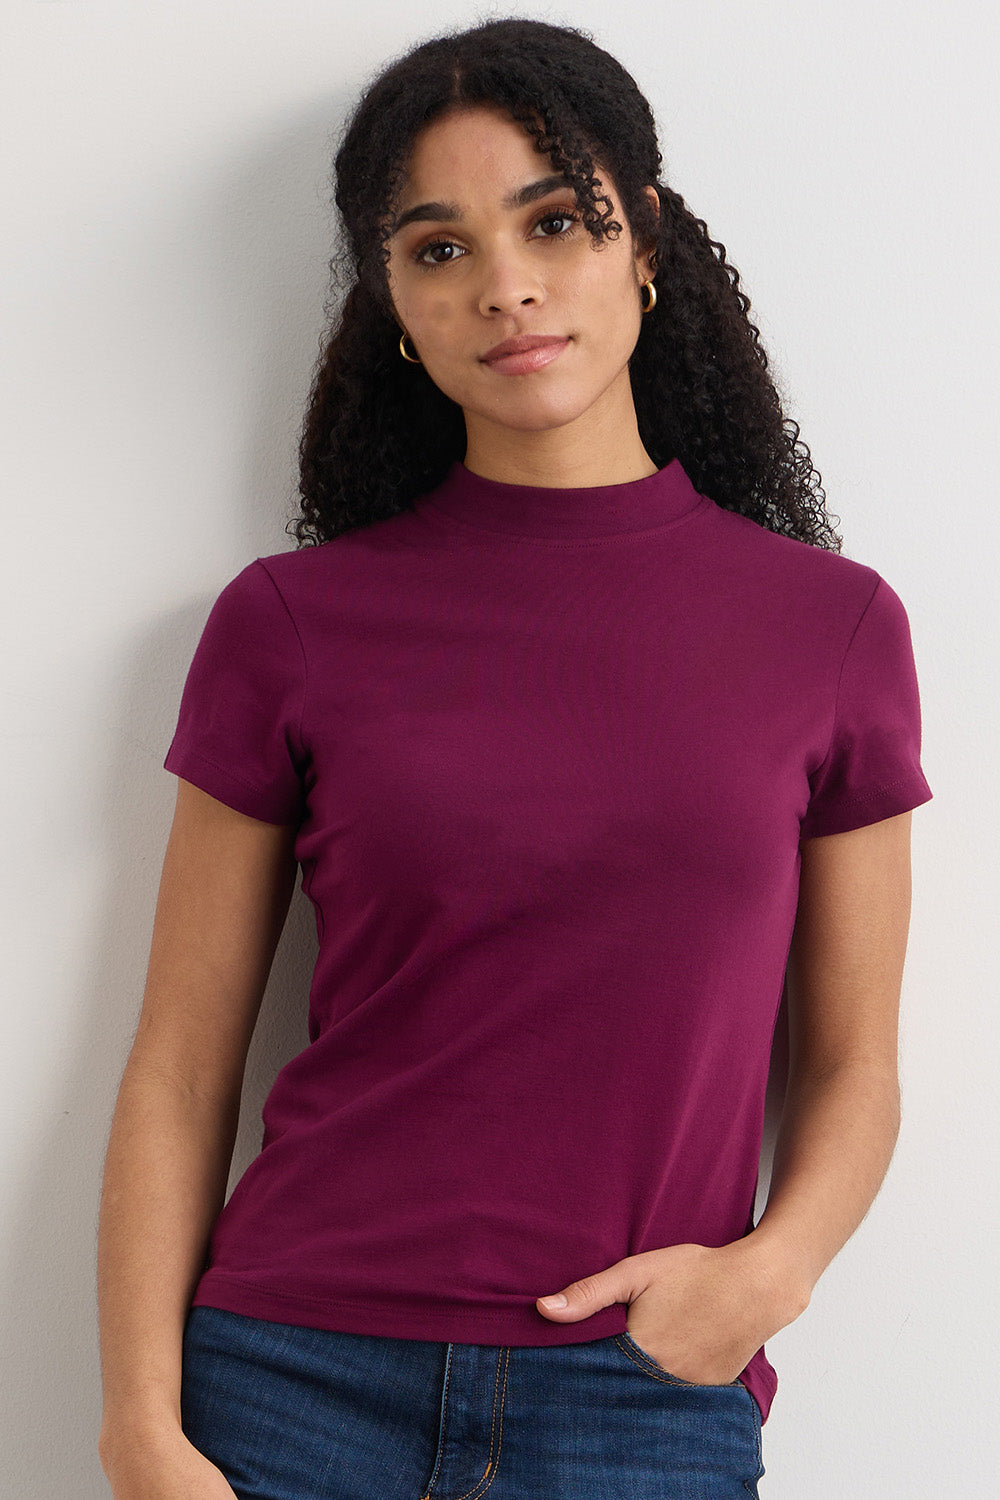 womens organic cotton slim mock neck tee - boysenberry magenta purple - fair indigo fair trade ethically made